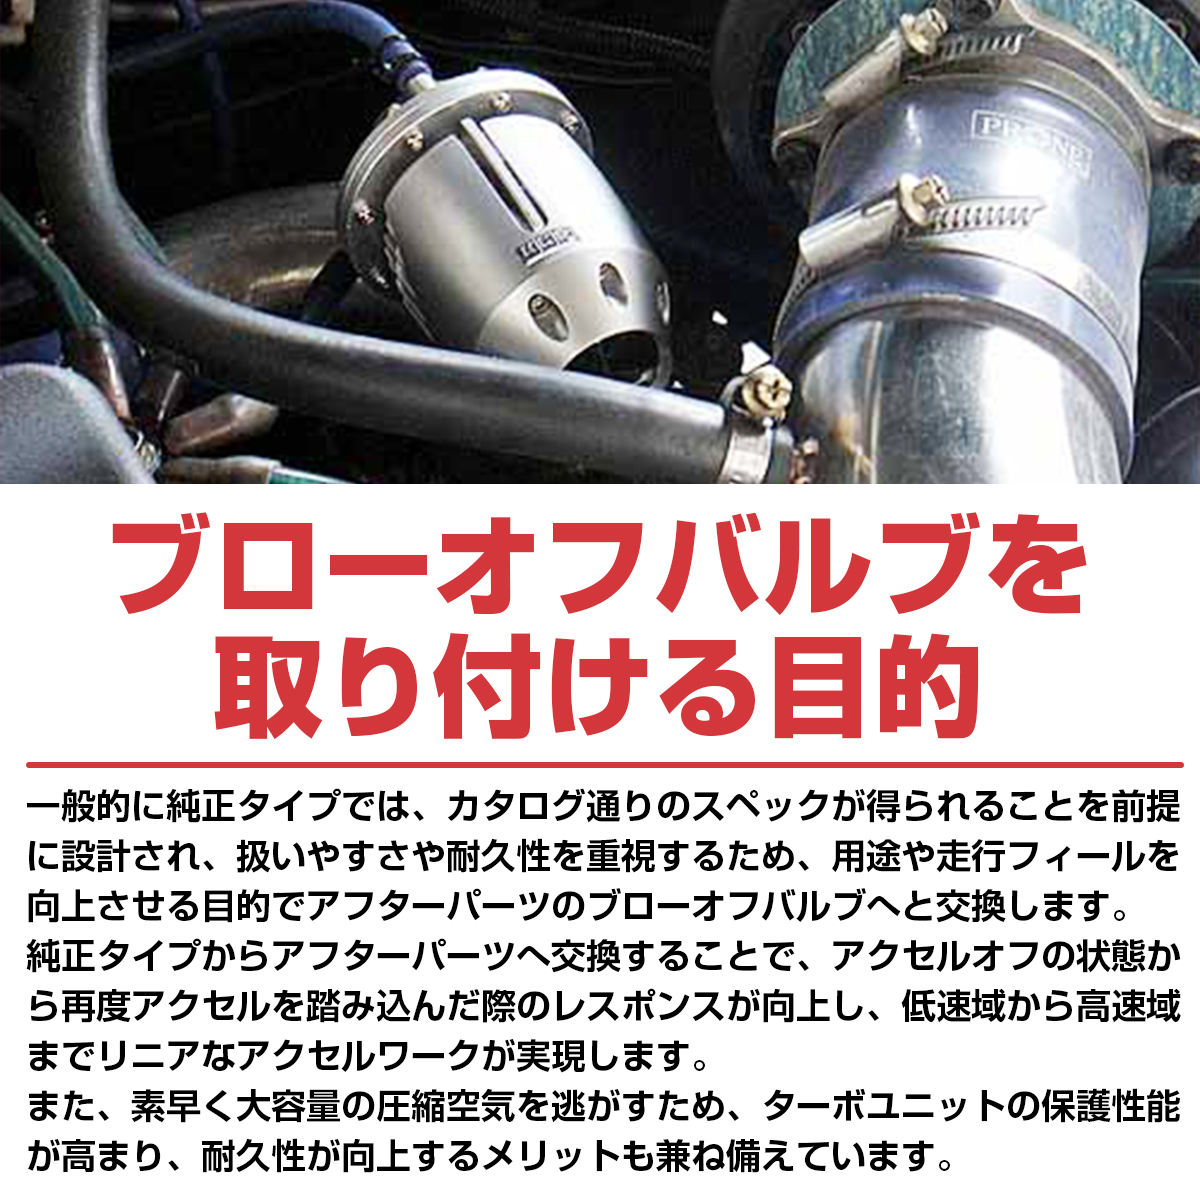  all-purpose blow off valve 25mm diameter turbo car turbine protection Jimny JB23/JA11/JA22 Wagon R MR Wagon Kei Kei HE21S